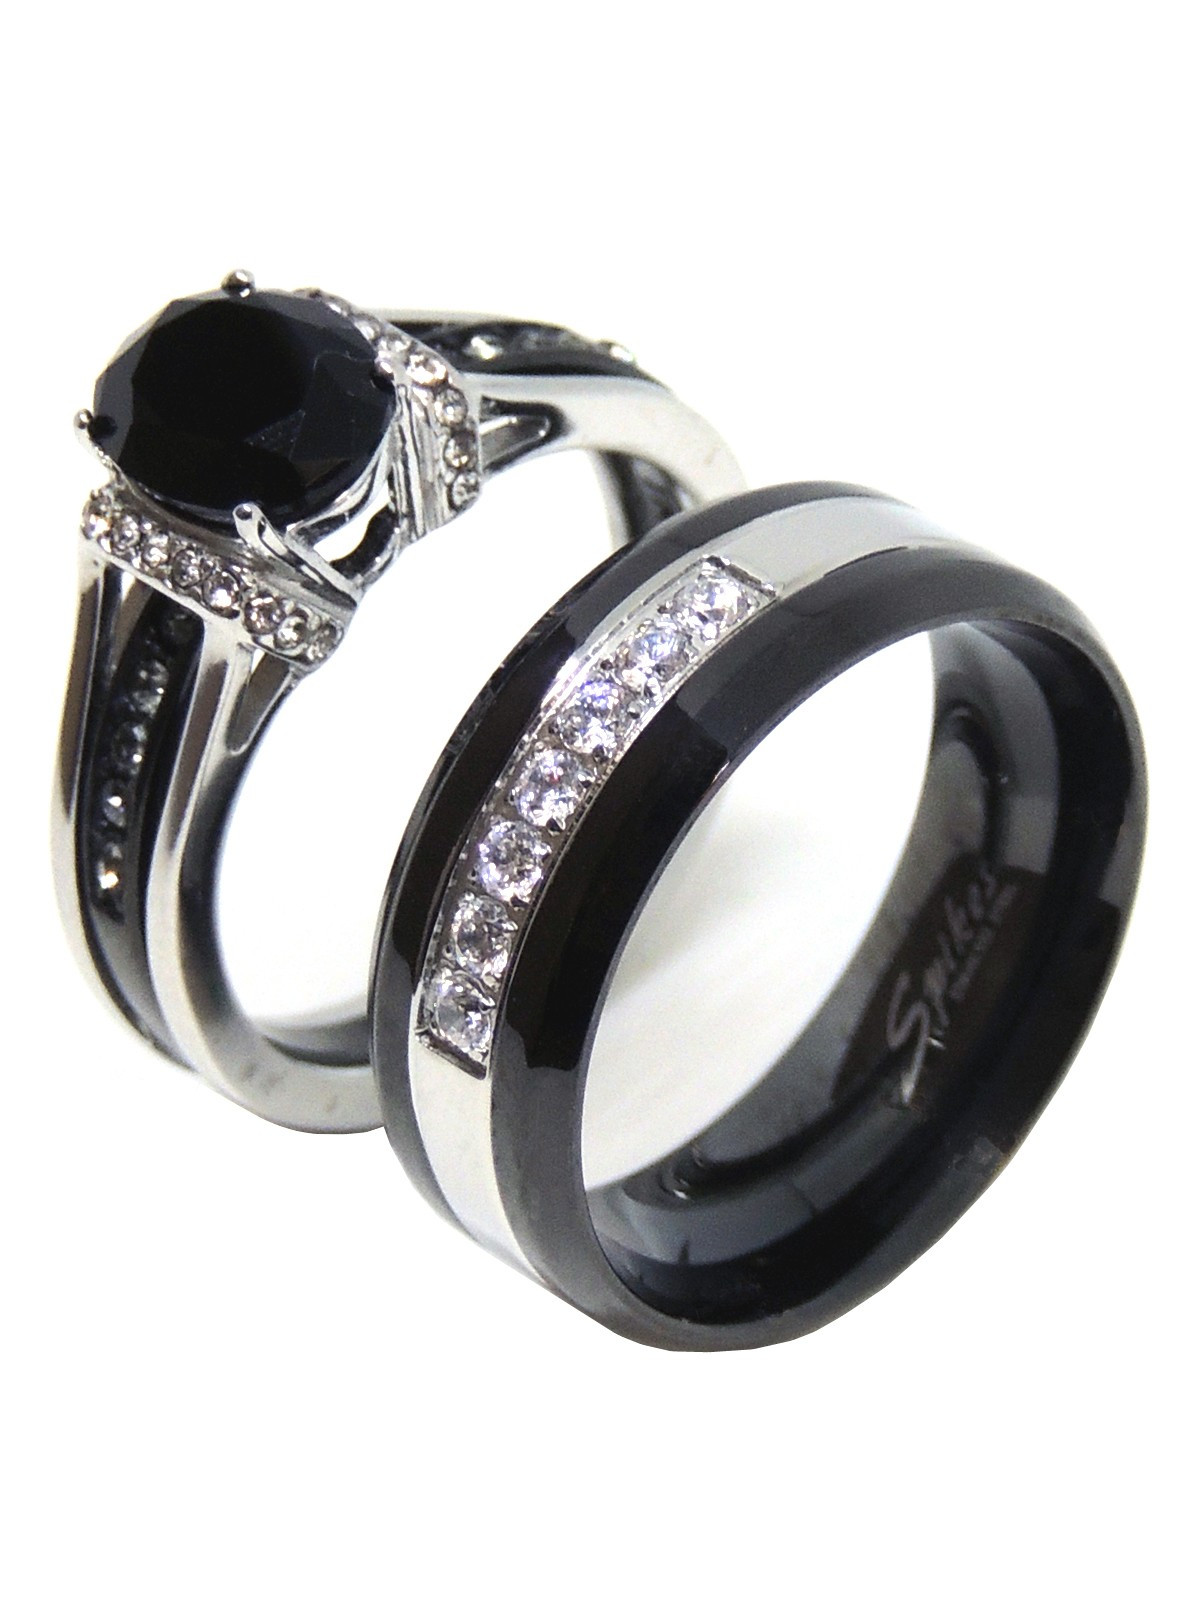 Womens Black Wedding Rings
 LanyJewelry Couple Rings Set Womens Black Oval CZ